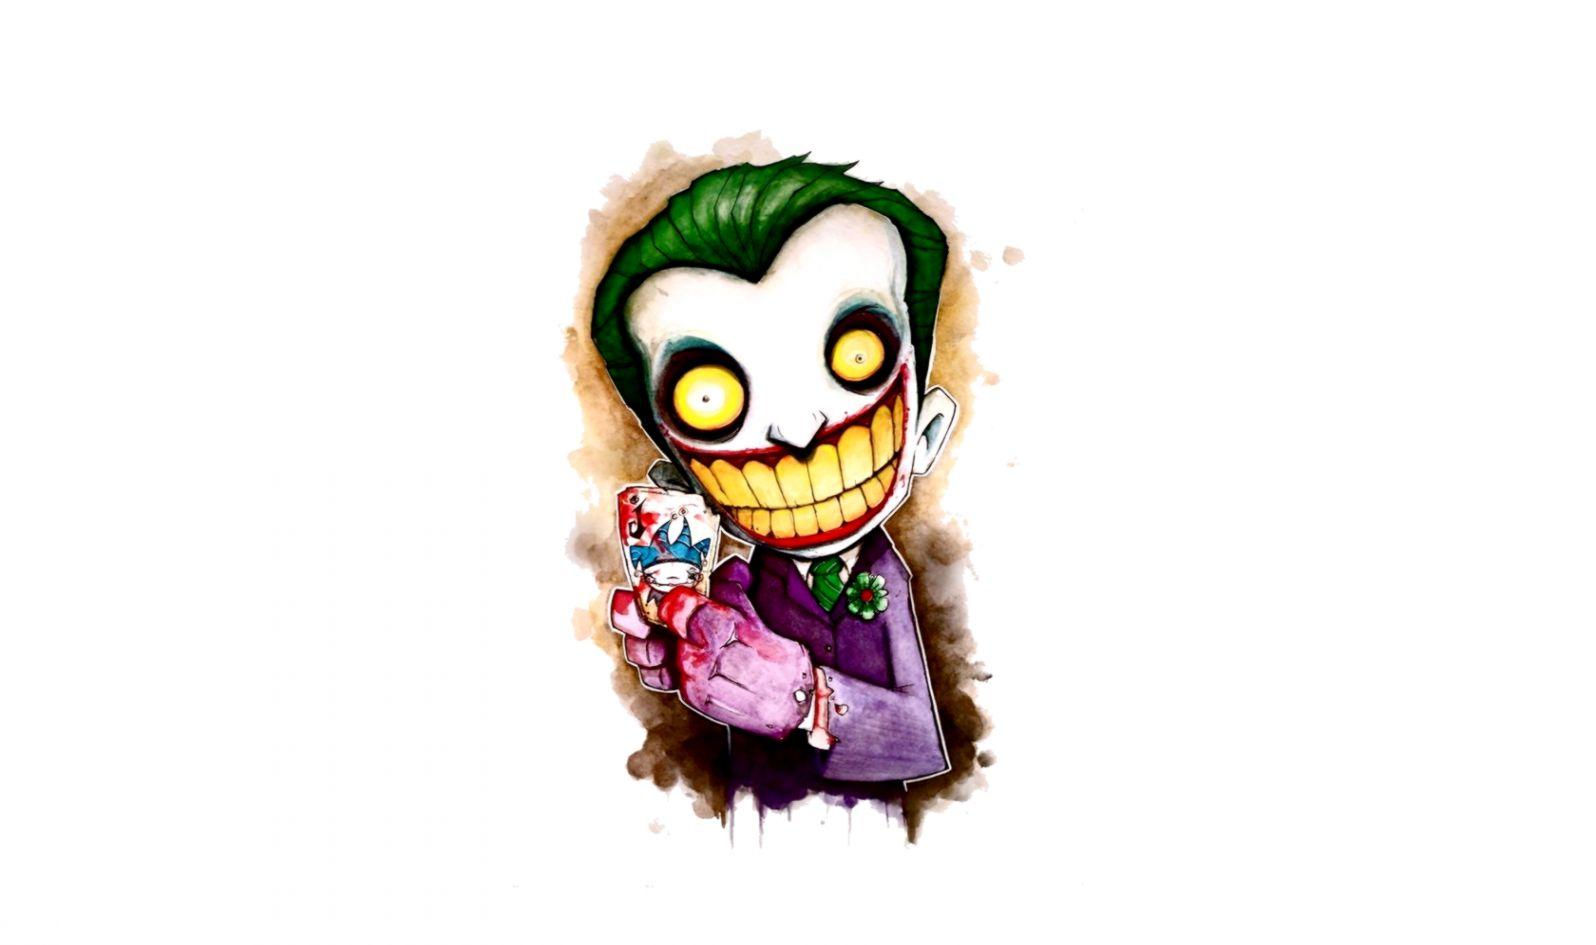 Cool Joker Smile Wallpaper. One plus Wallpaper